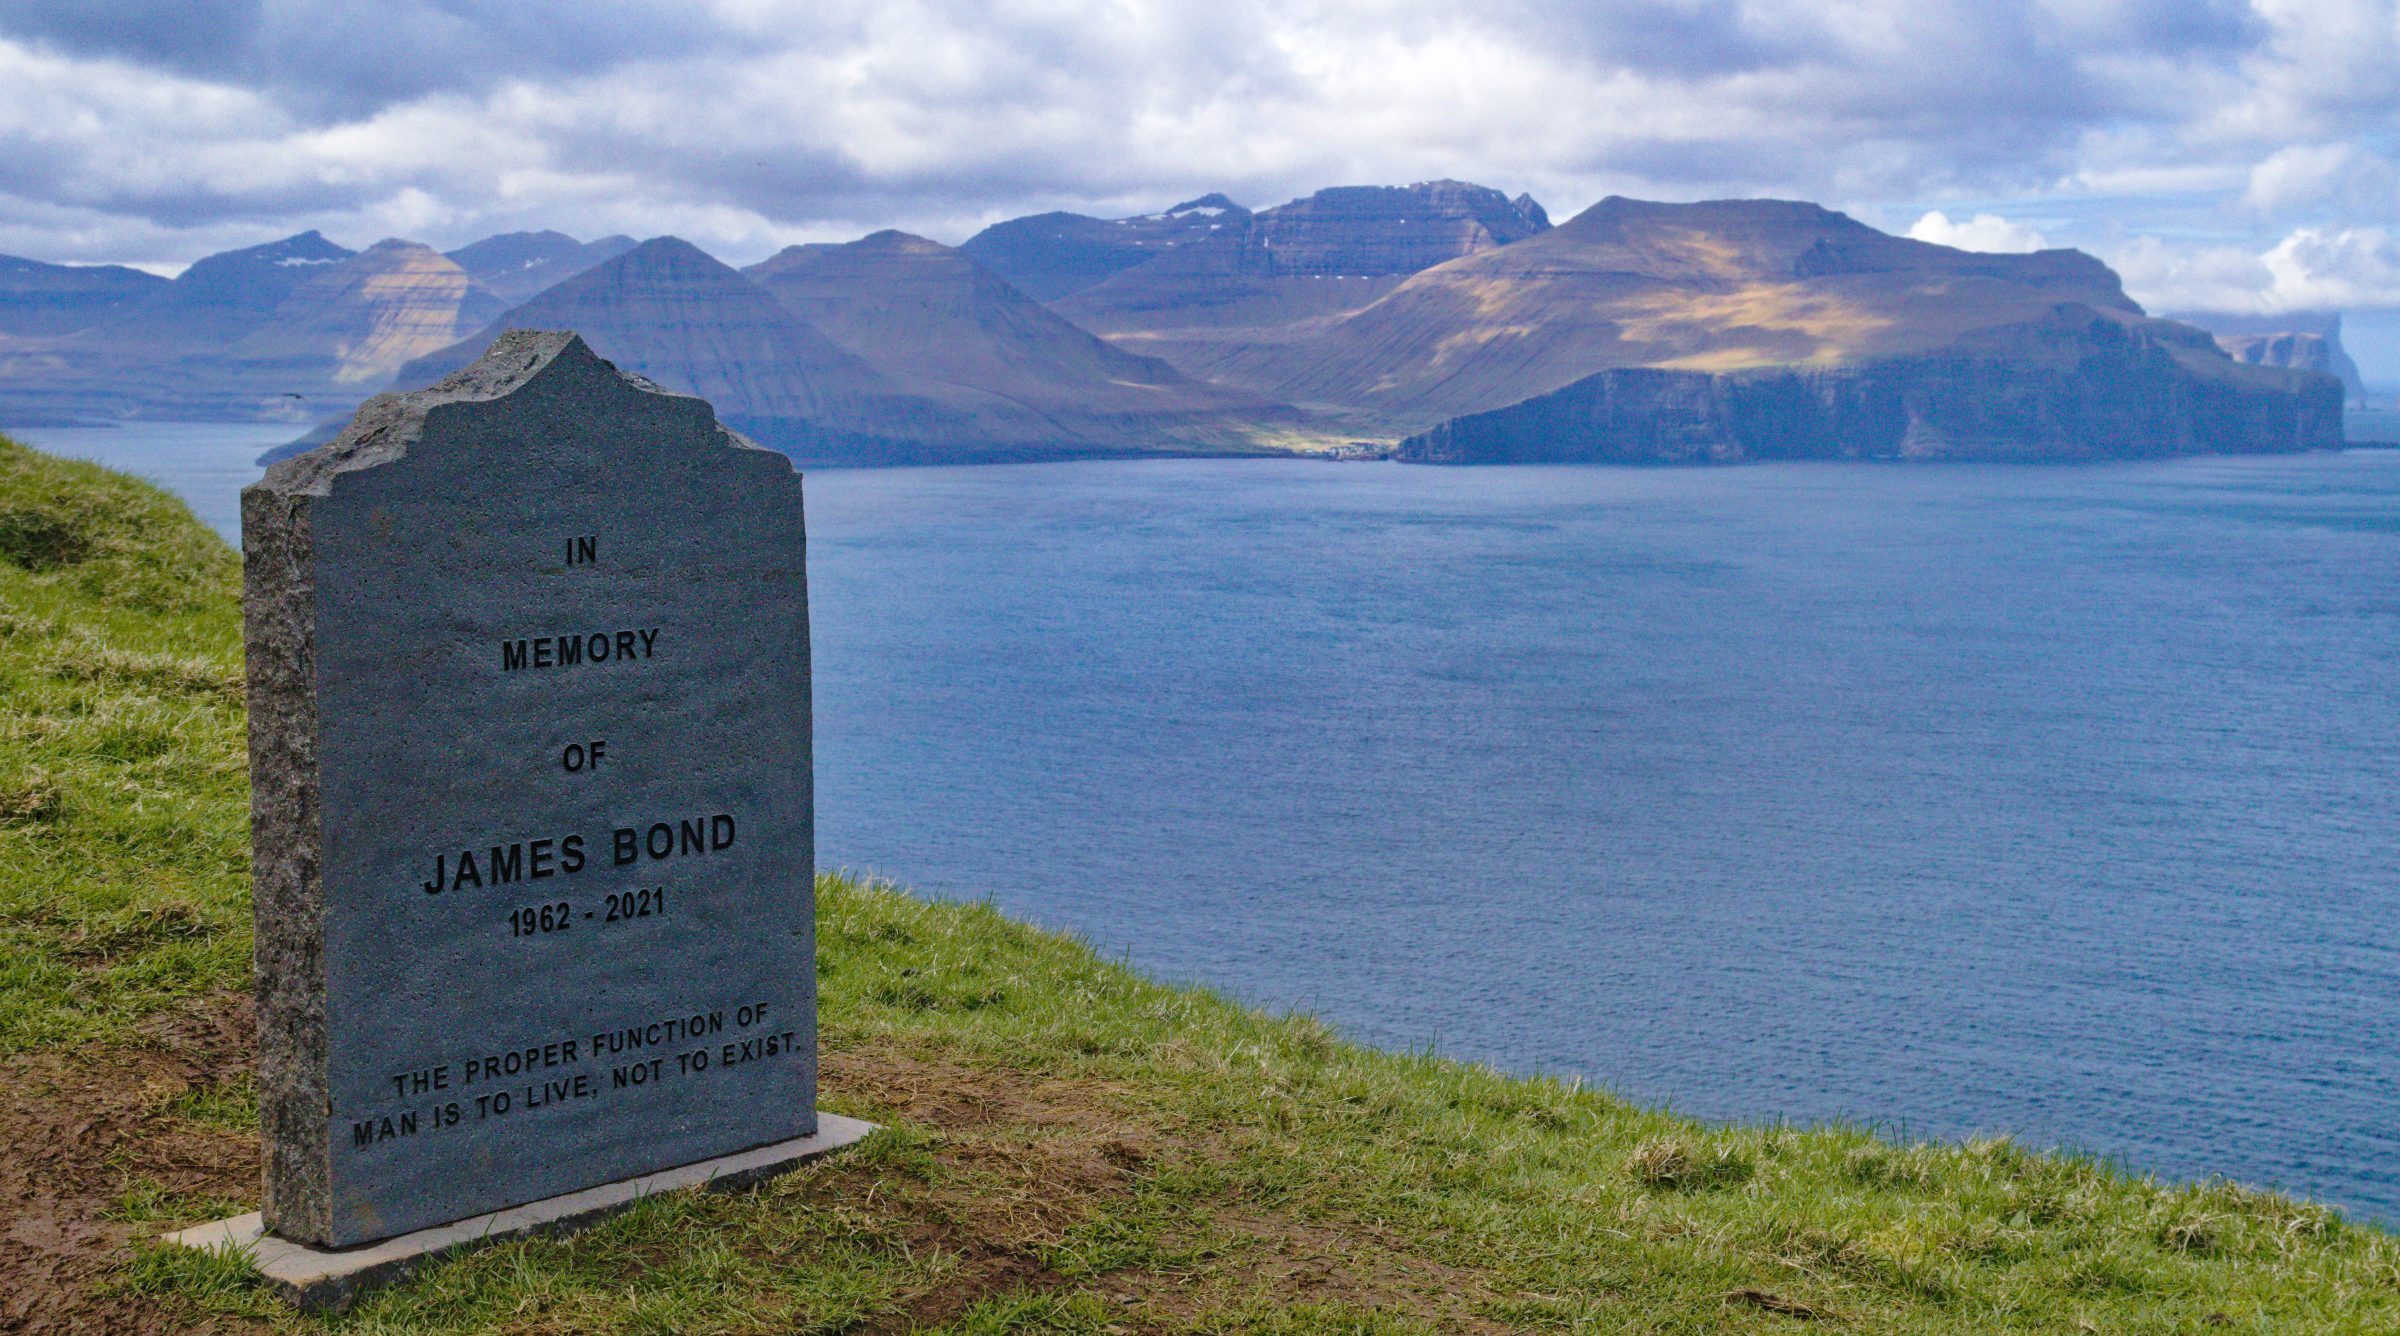 James Bond memorial stone in the Faroe Islands